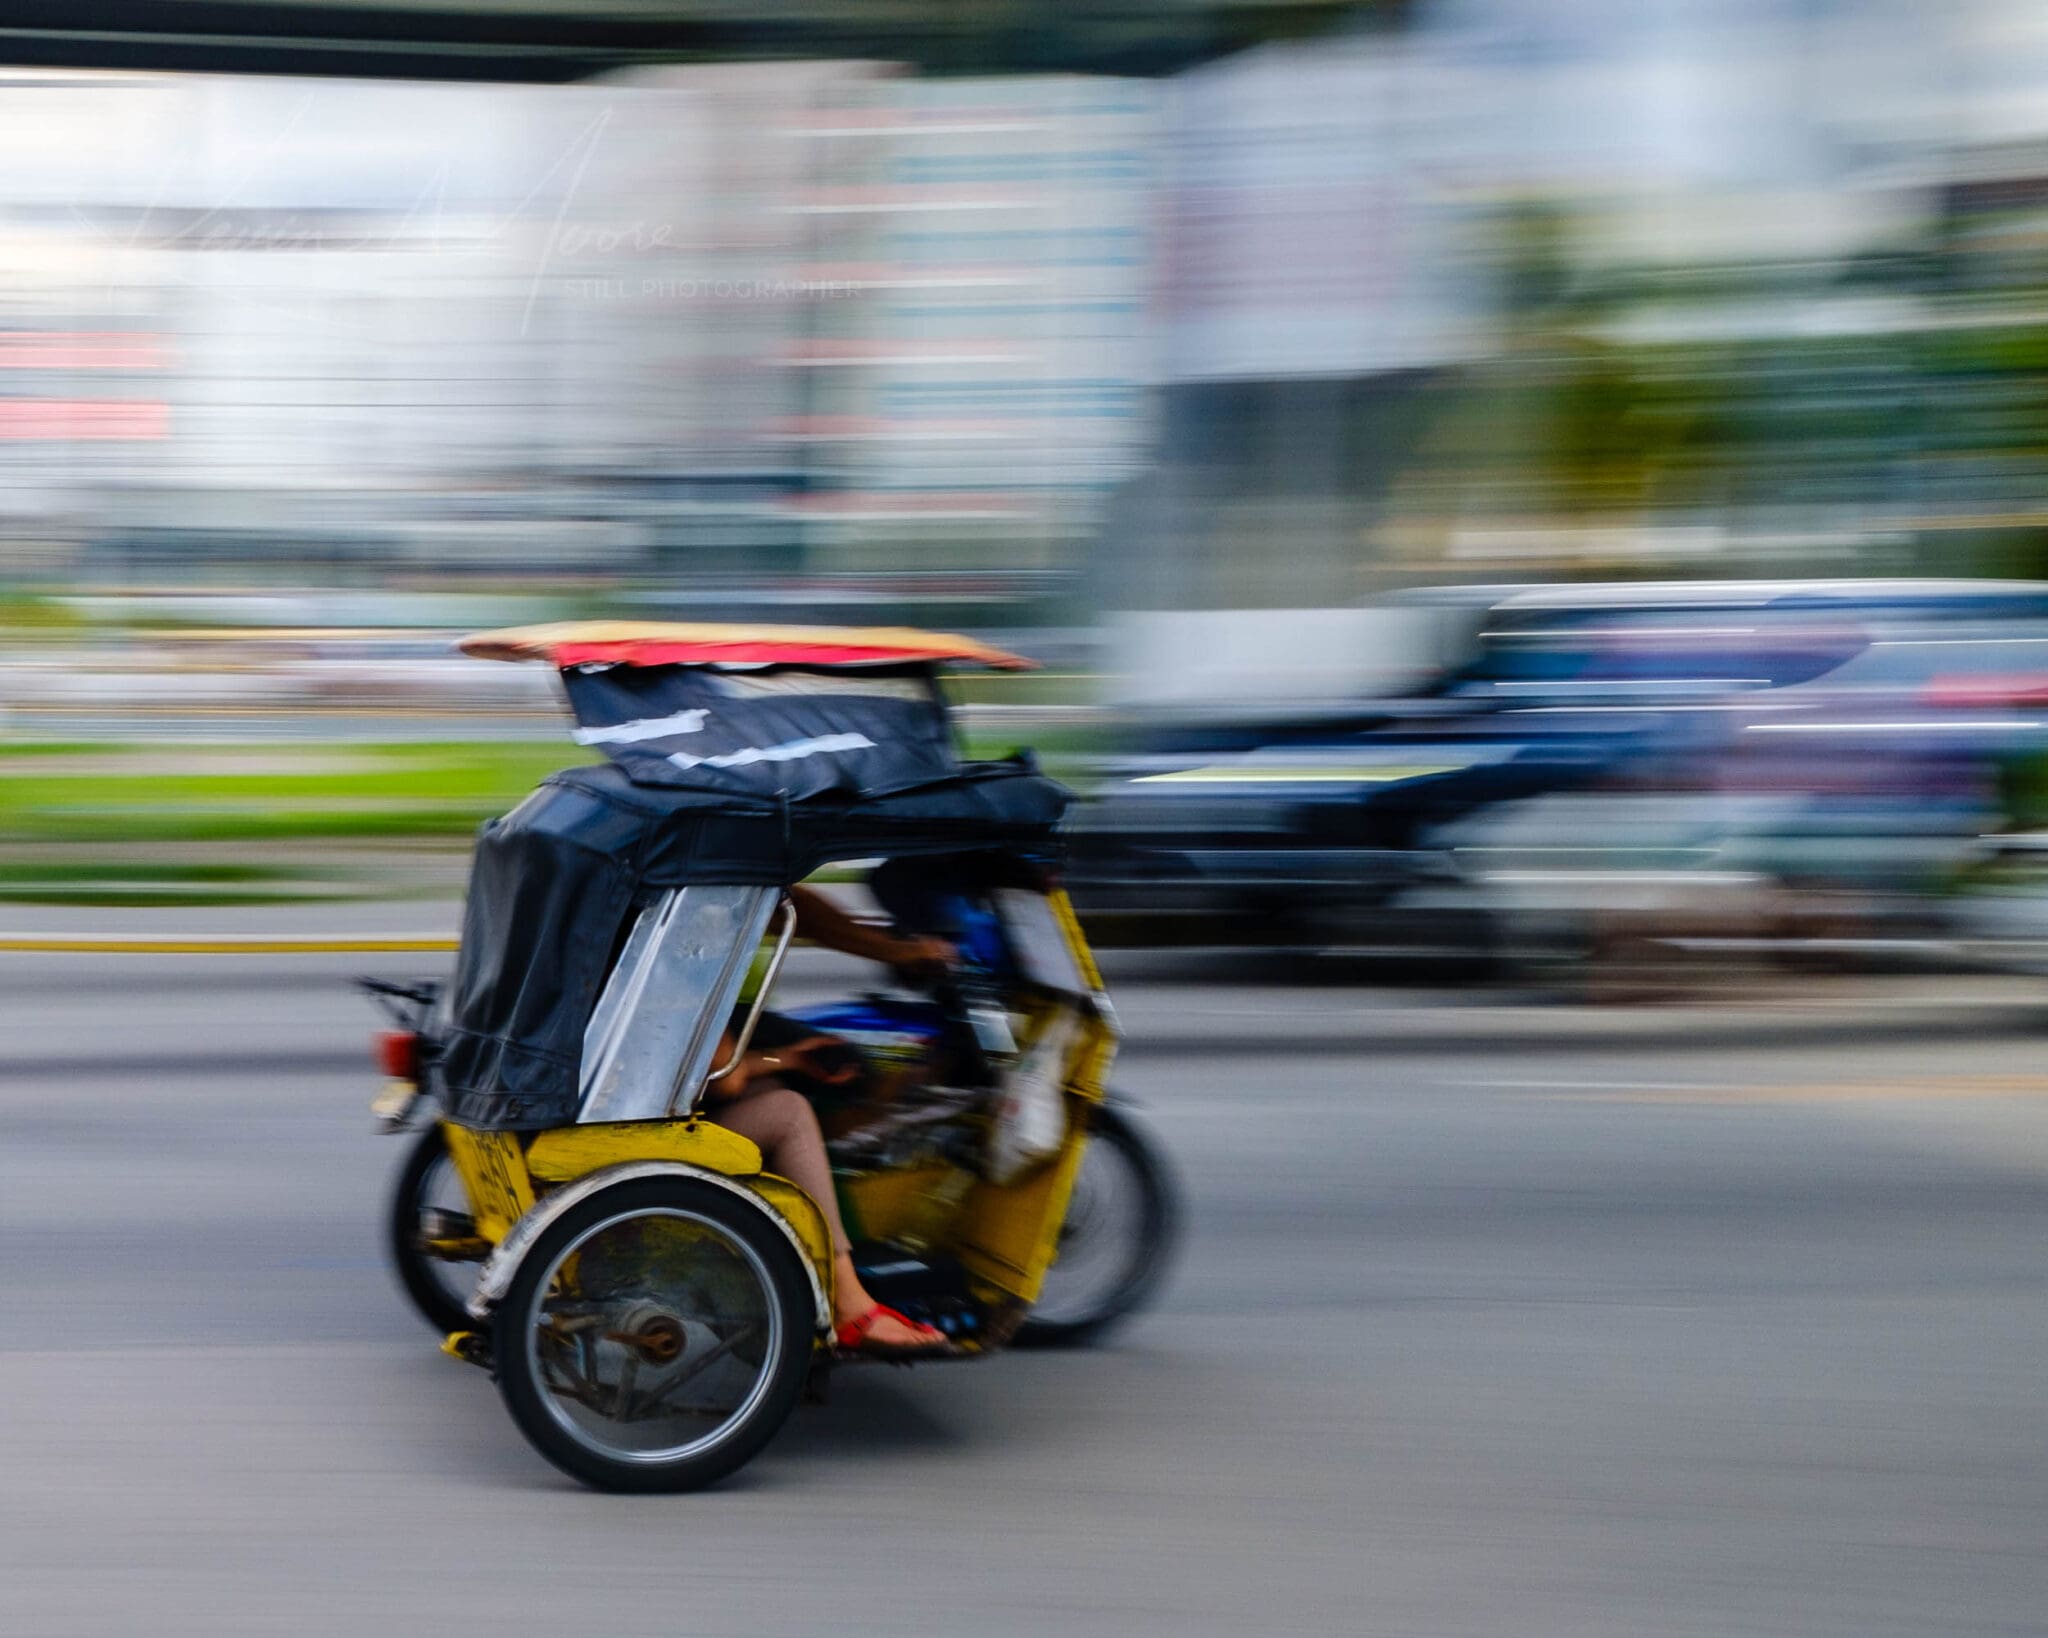 Yellow Trike speeding through blurred cityscape, signifying urban hustle in motion.